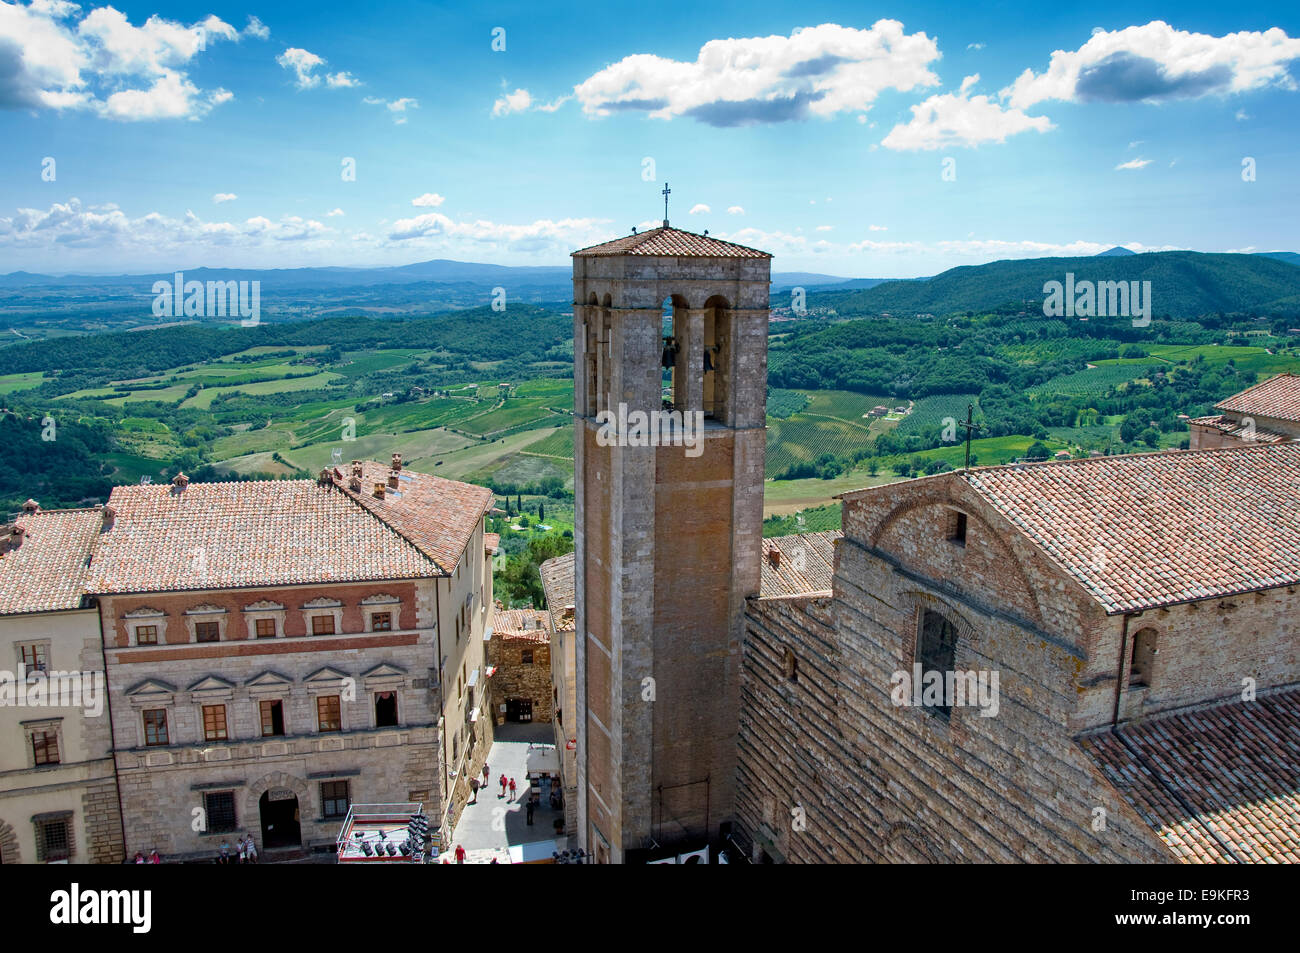 La Cattedrale di Santa Maria Assunta, Montepulciano, Siena, Toscana, Italia Foto de stock